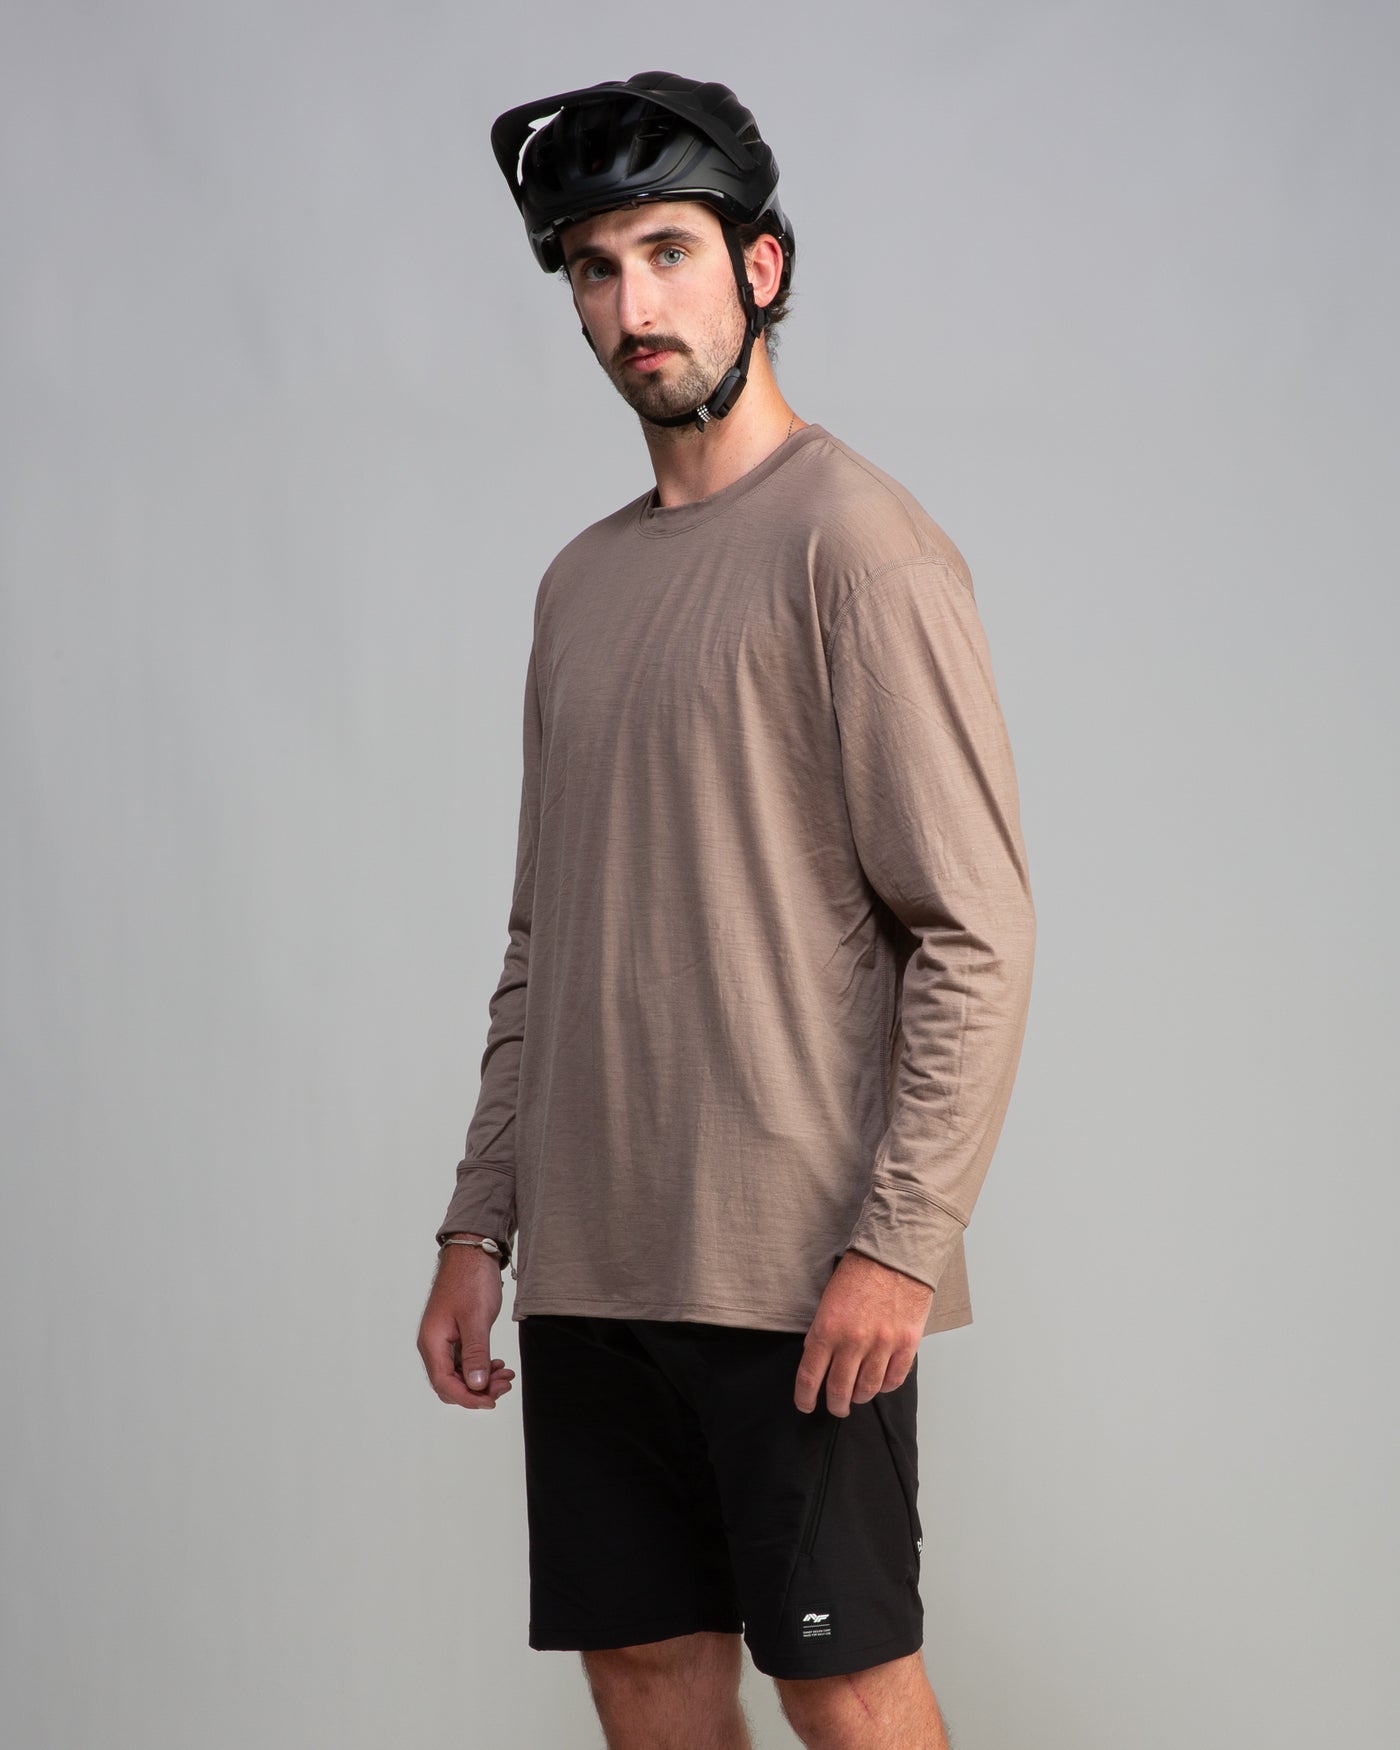 Super Fine 100% Merino Wool Long Sleeve Riding Tee - Fungi